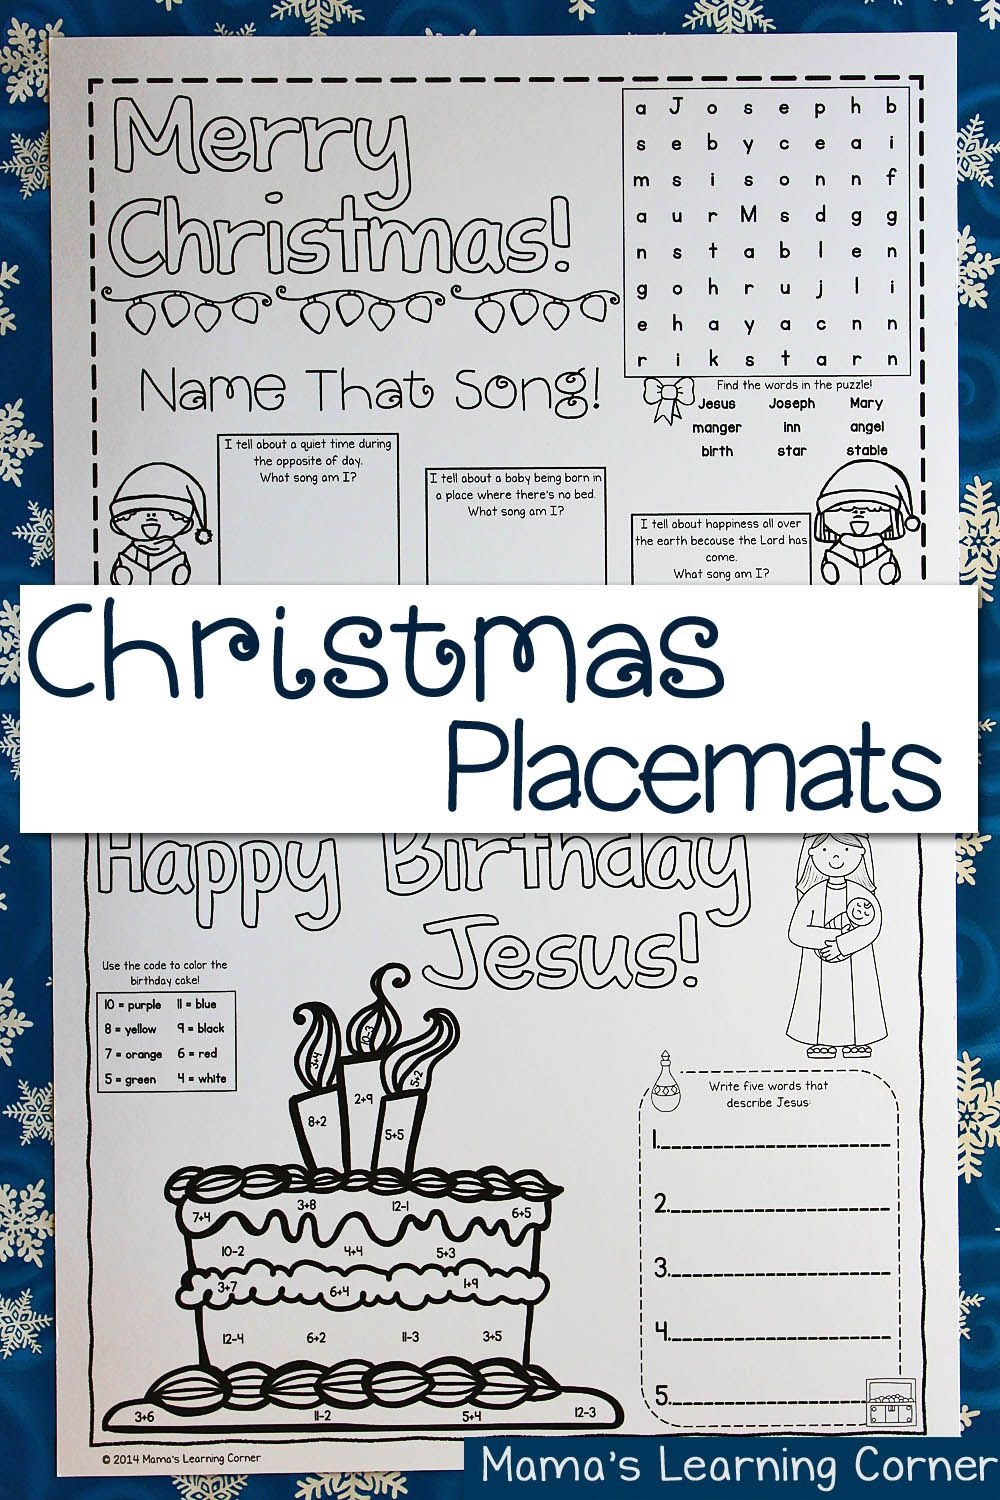 Printable Christmas Placemats | Ultimate Homeschool Board - Free Printable Christmas Placemats For Adults